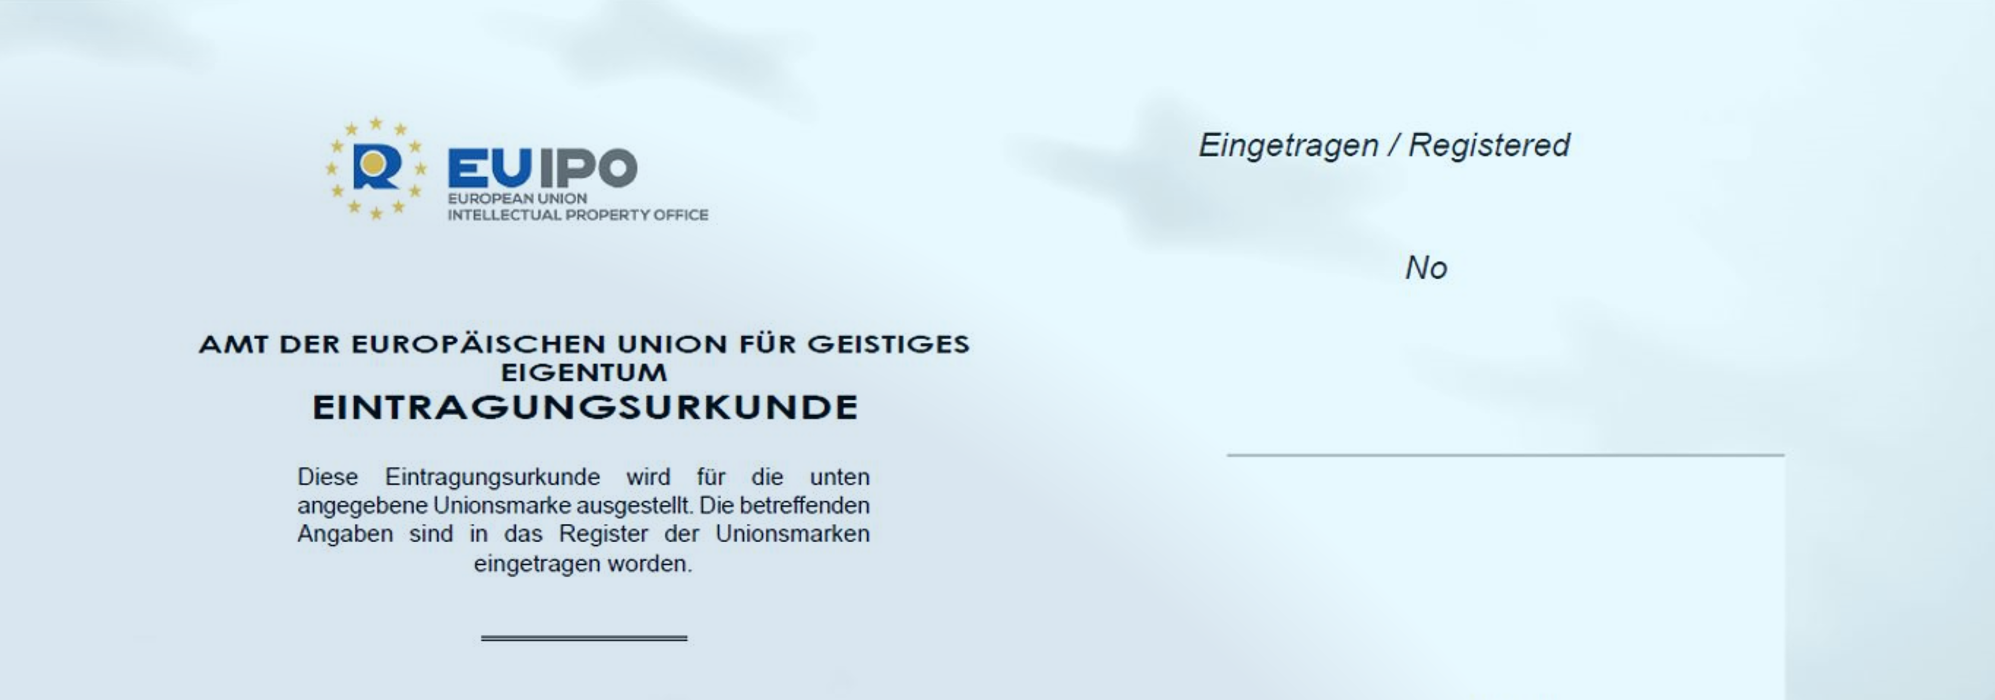 European Trademark Certificate